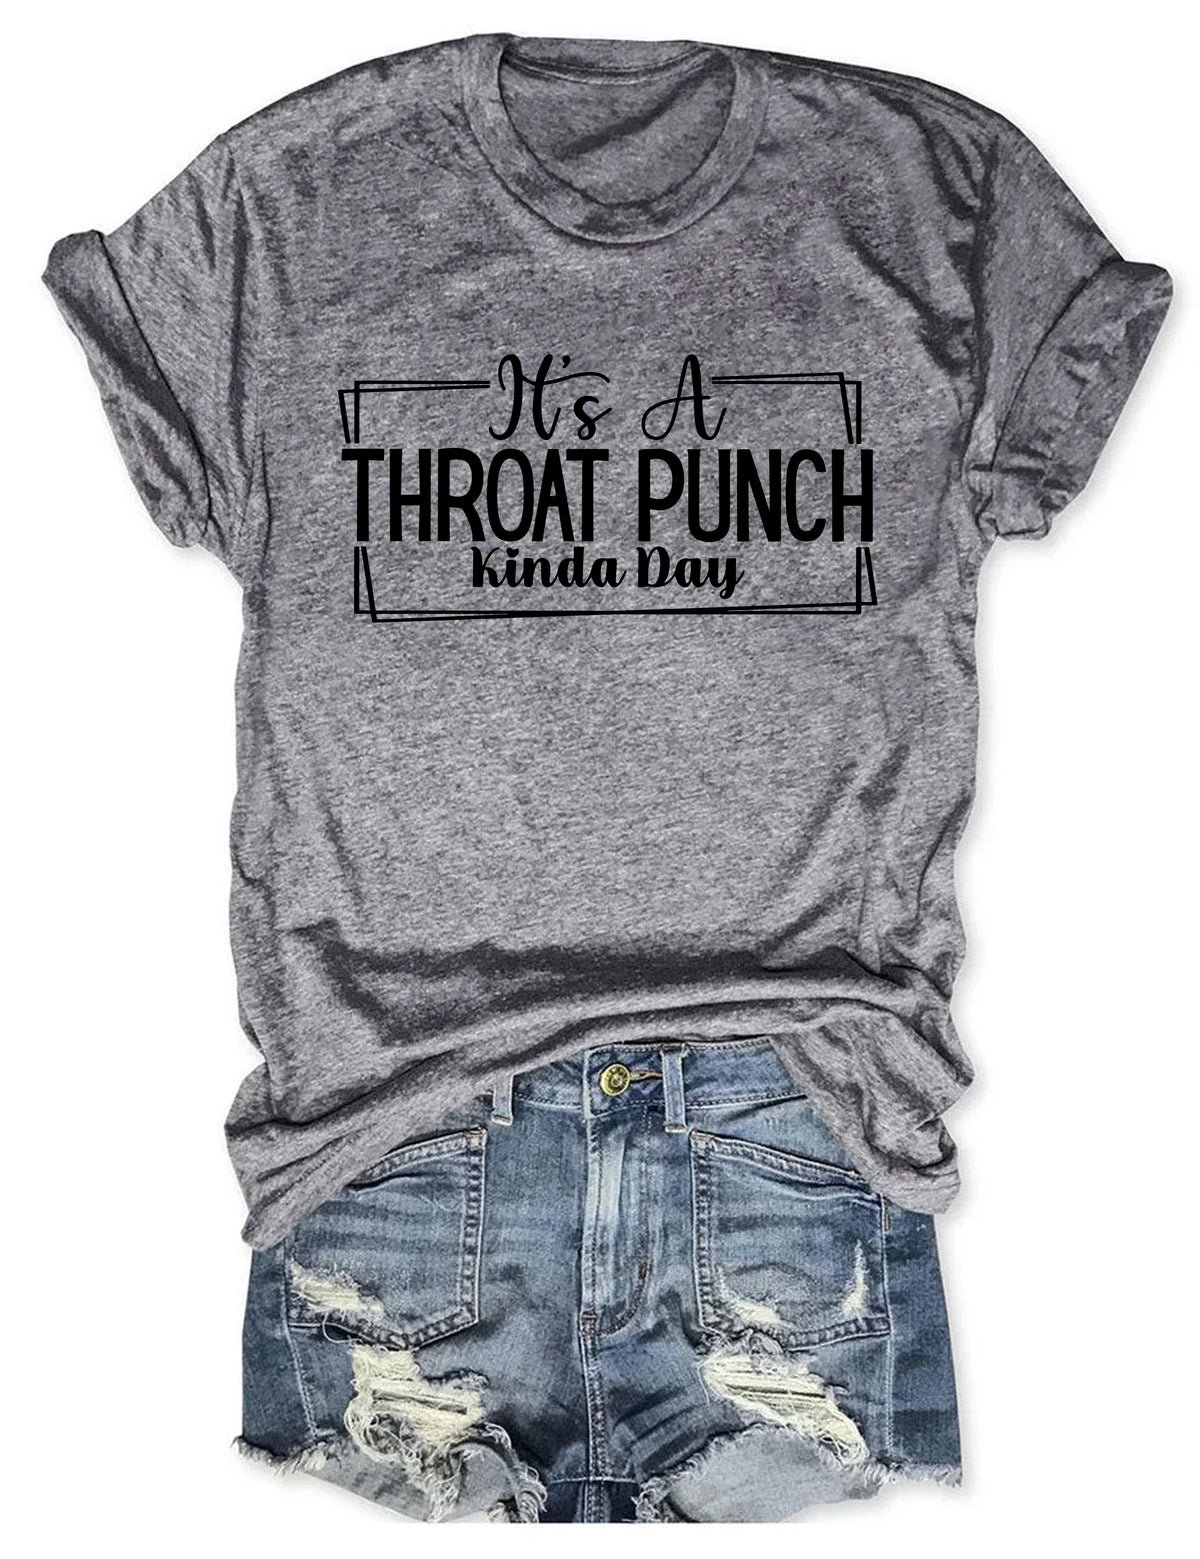 It's A Throat Punch Kinda Day T-Shirt